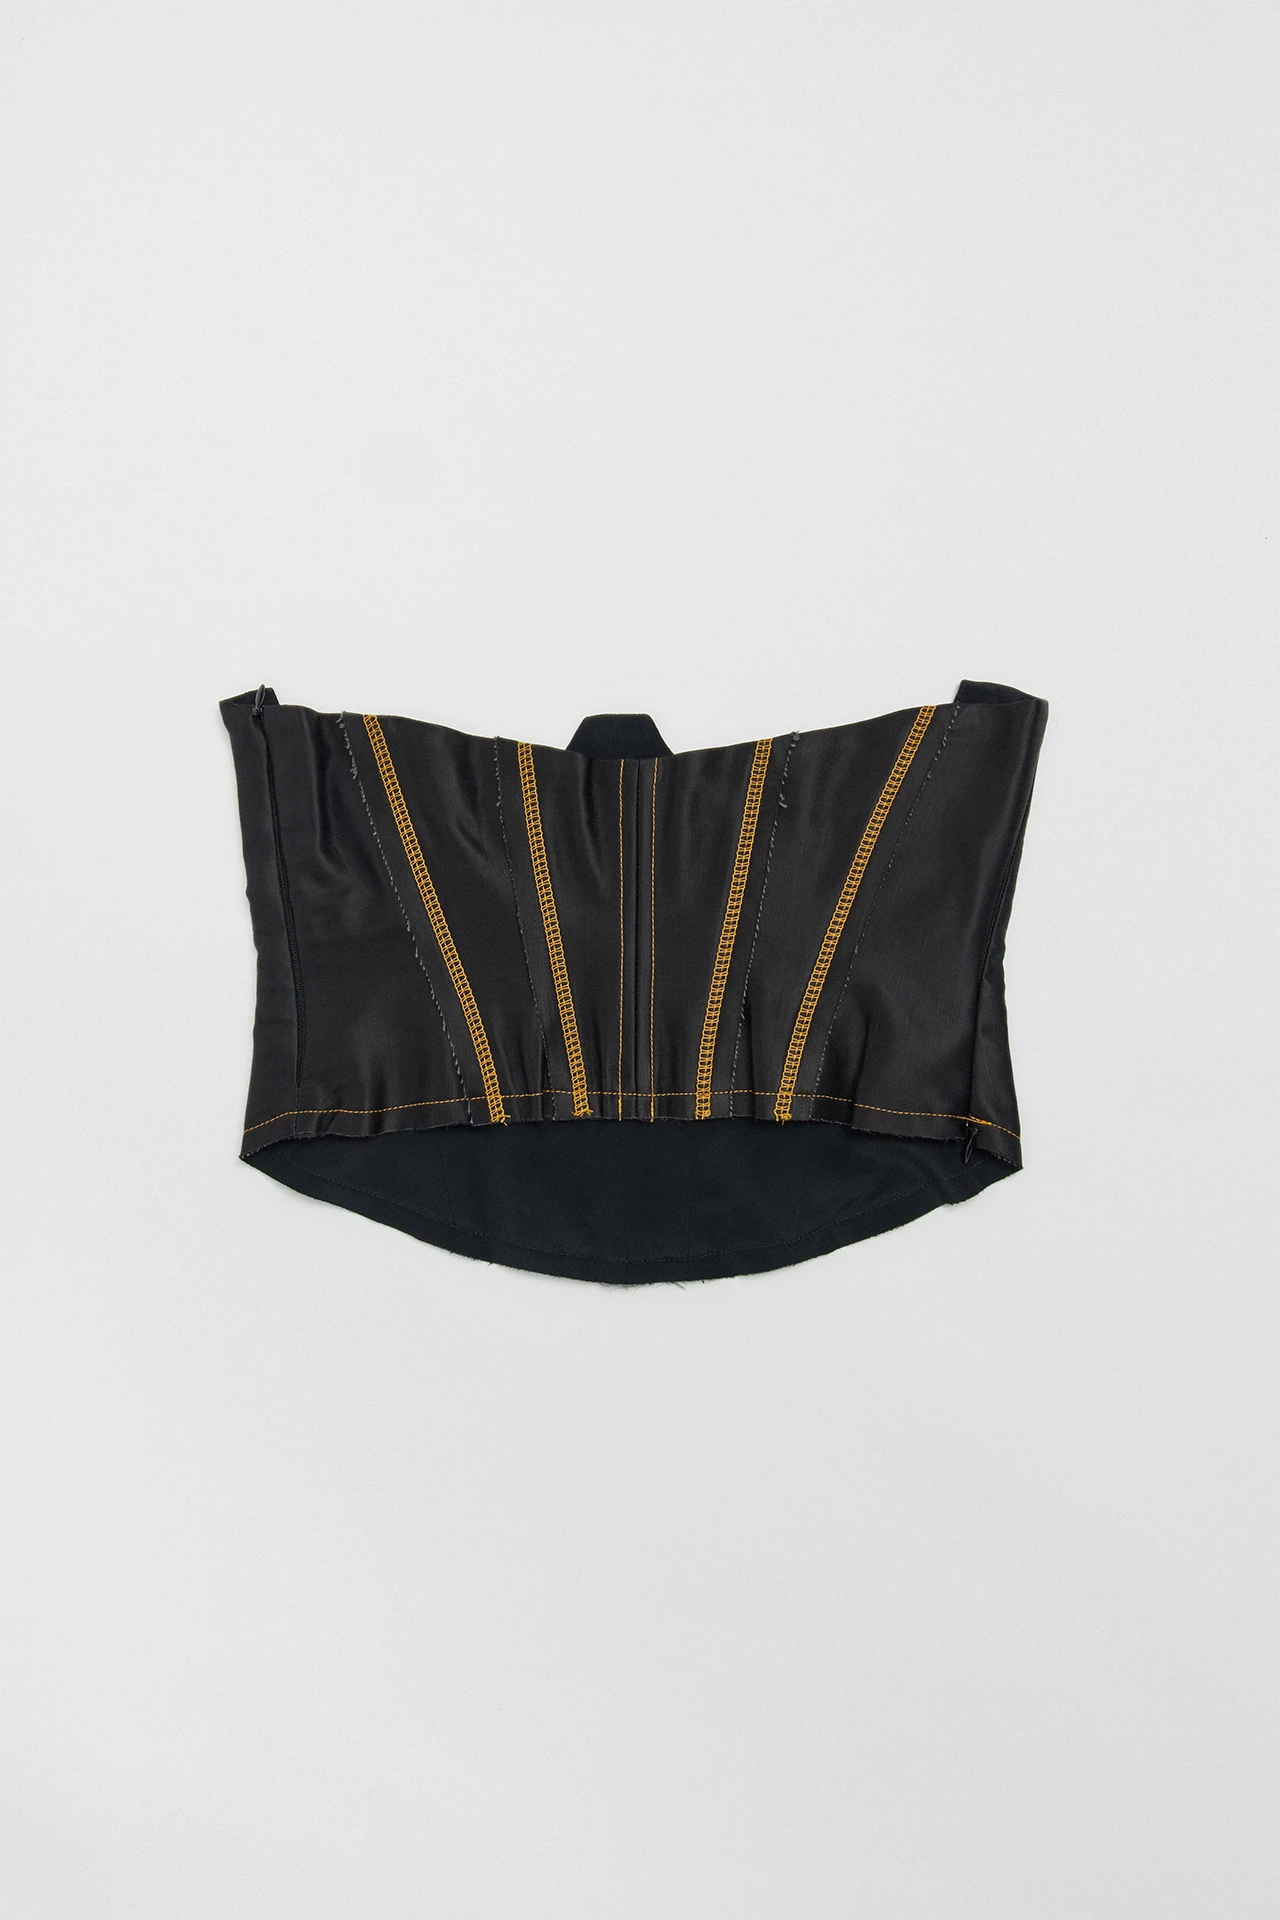 Miista-vera-dark-slate-corset-04